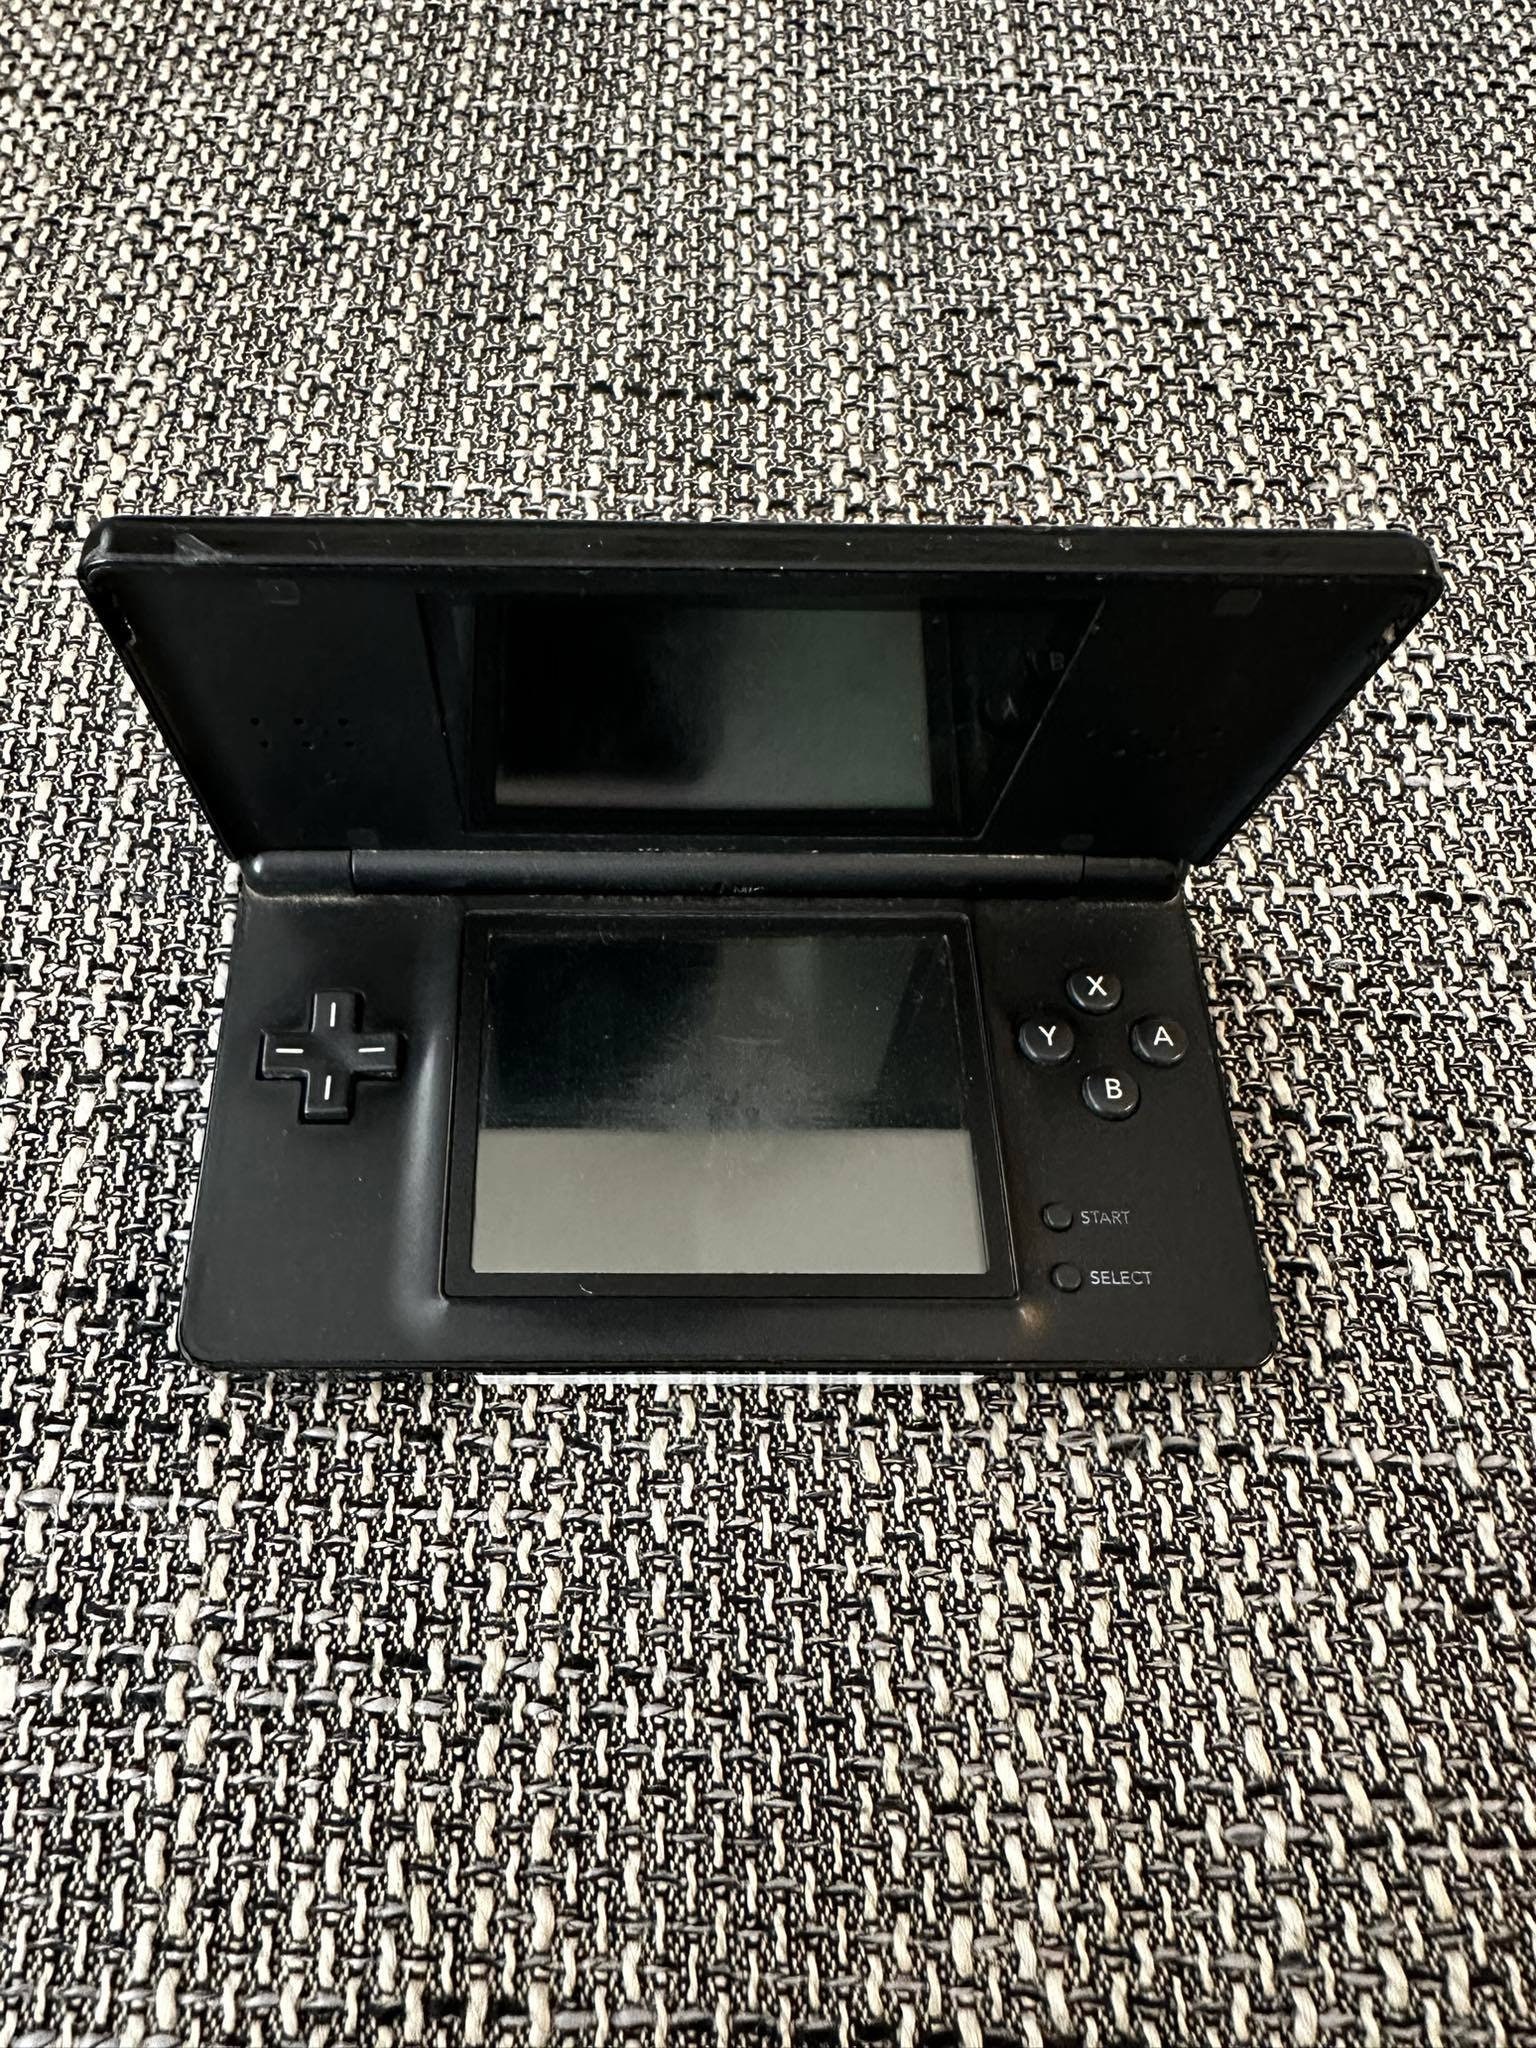 Nintendo Dsi McDonald's Console Color Black Japan Used